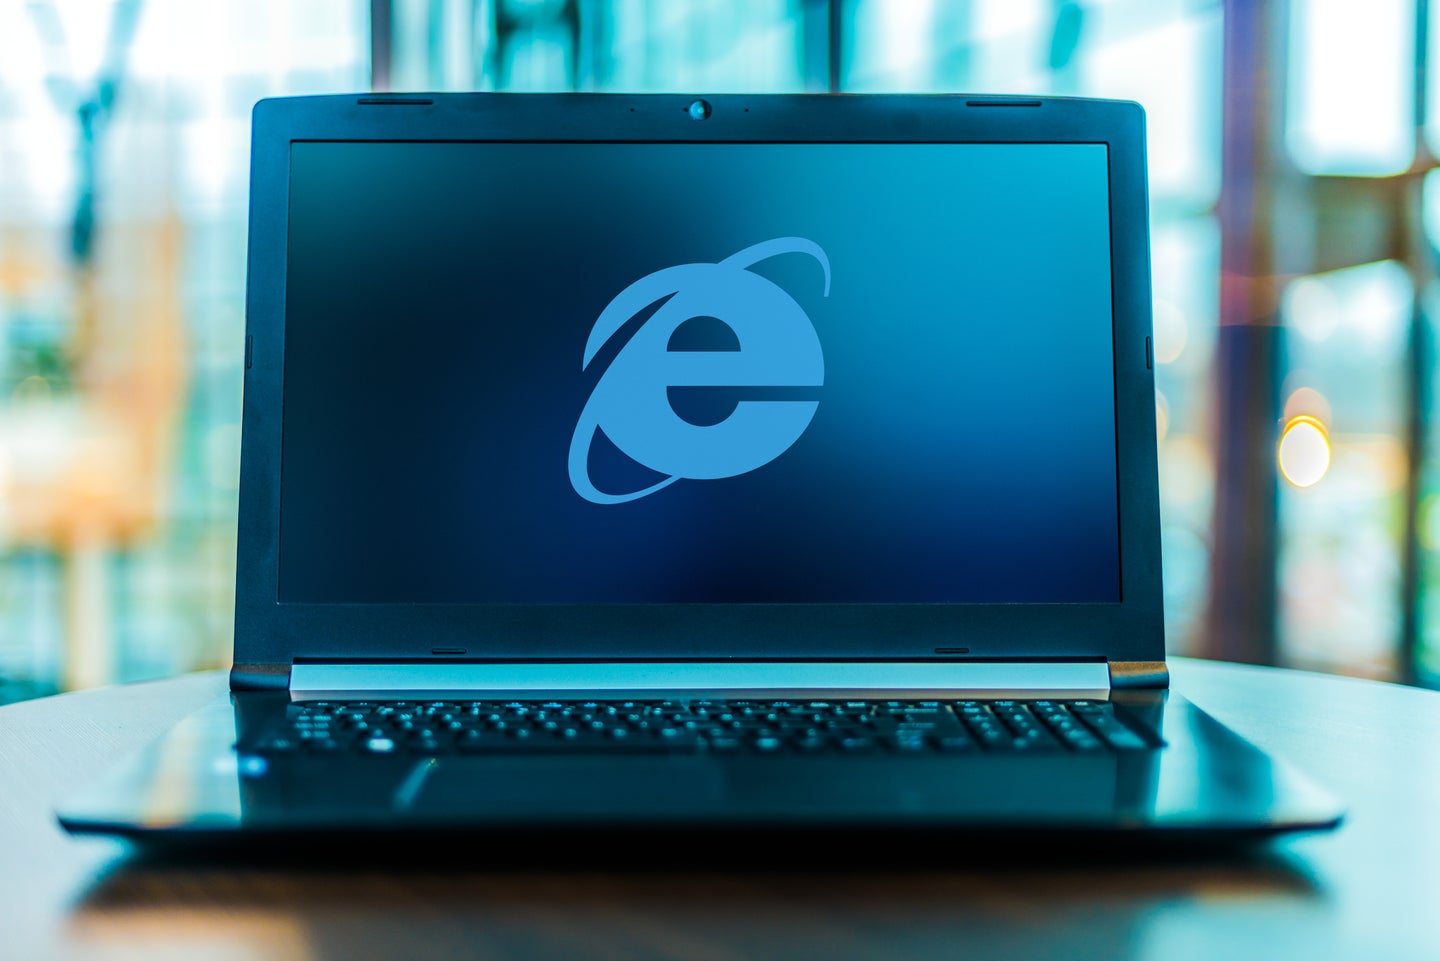 internet explorer logo on laptop